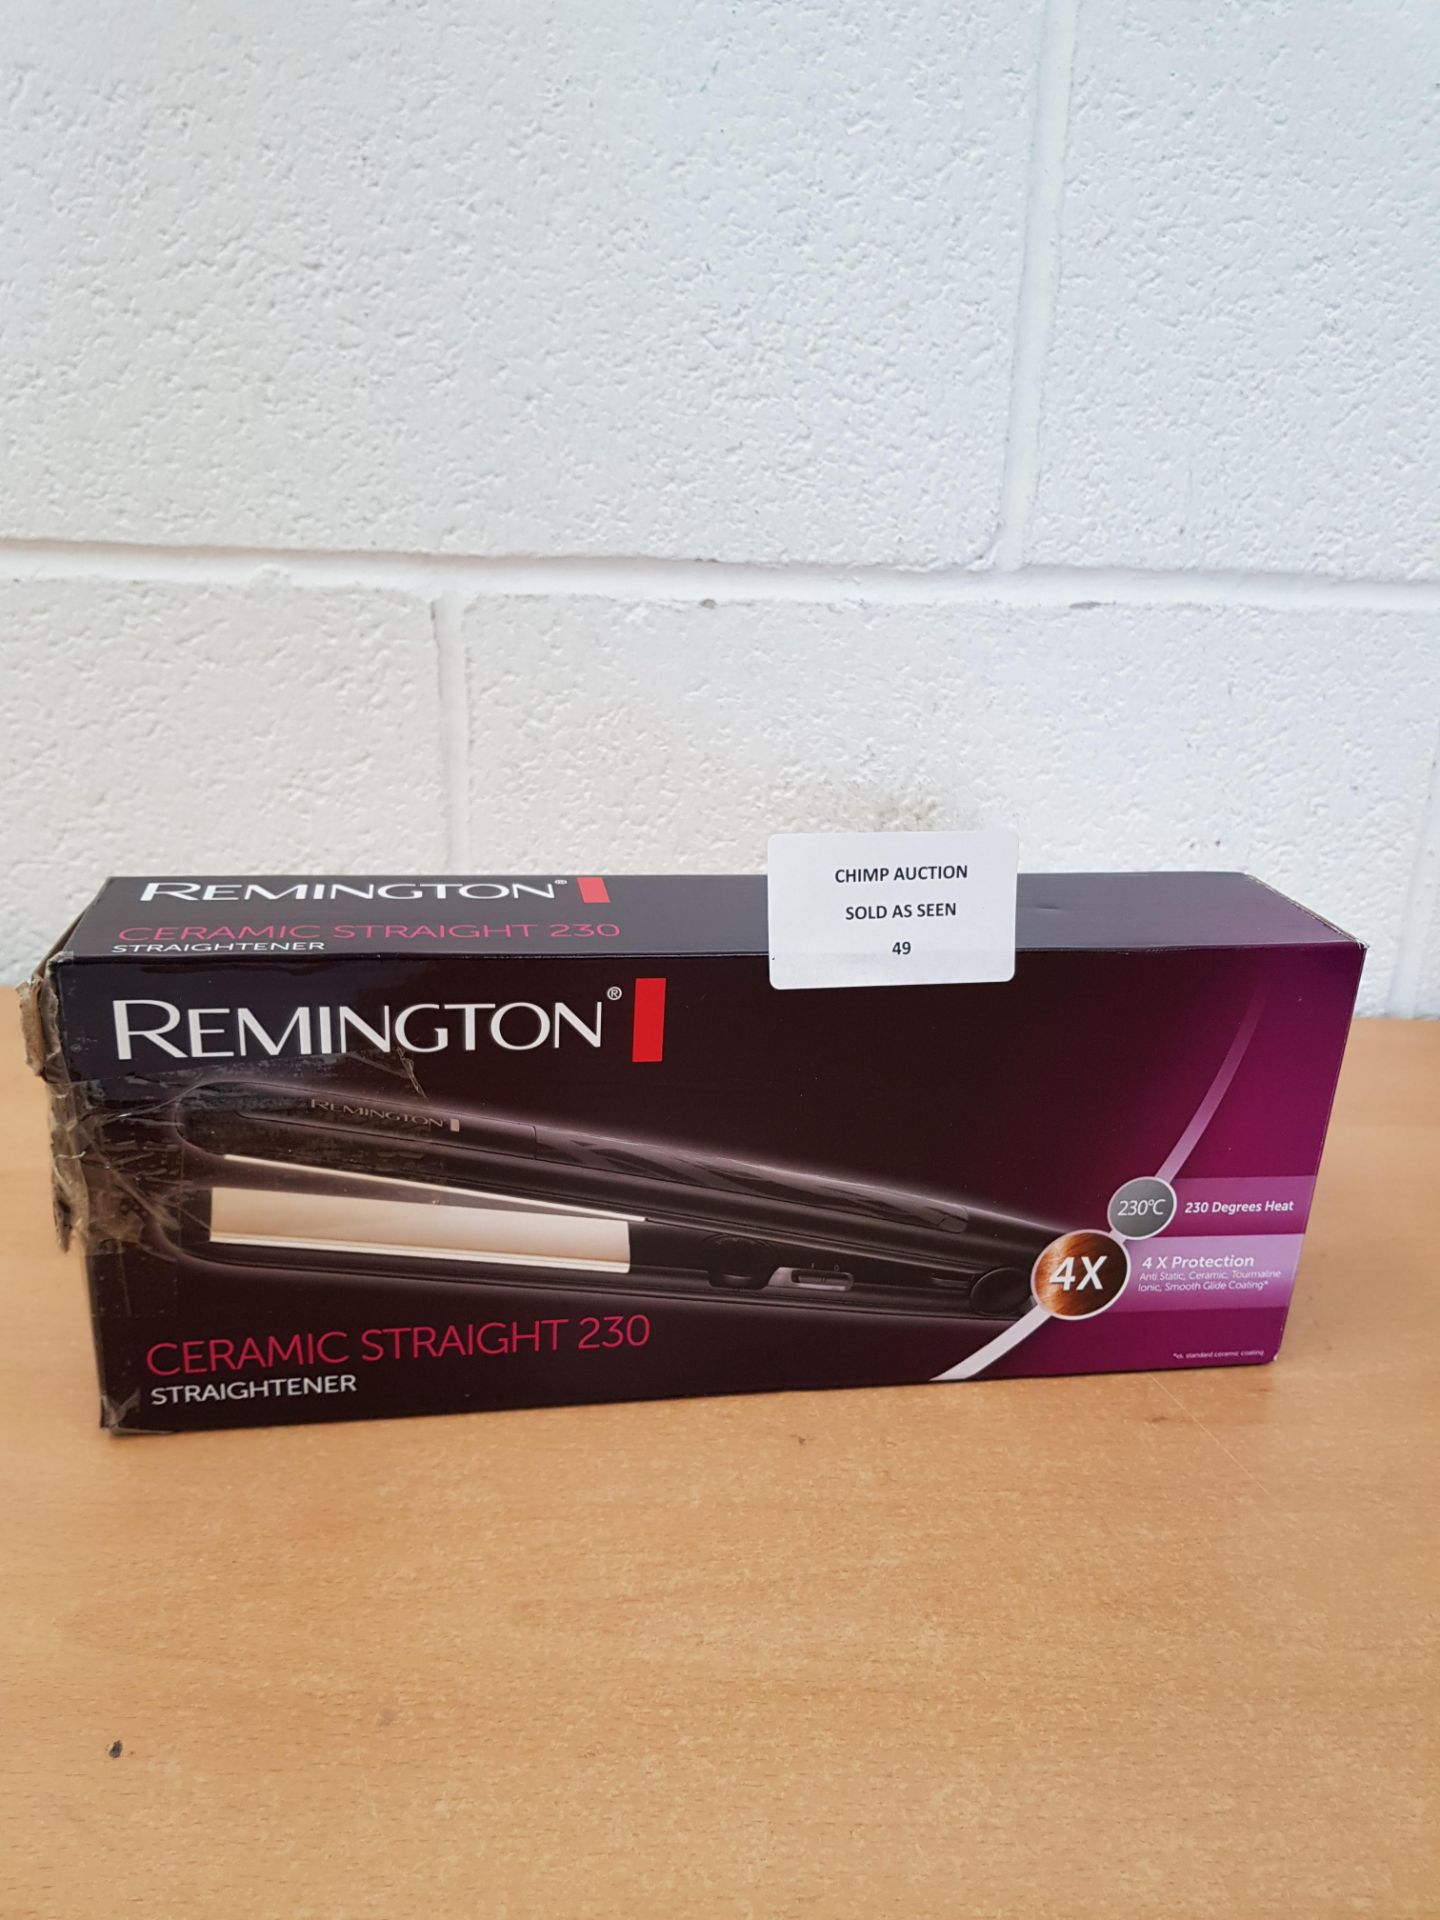 Remington Ceramic Straight 230 Hair Straightener